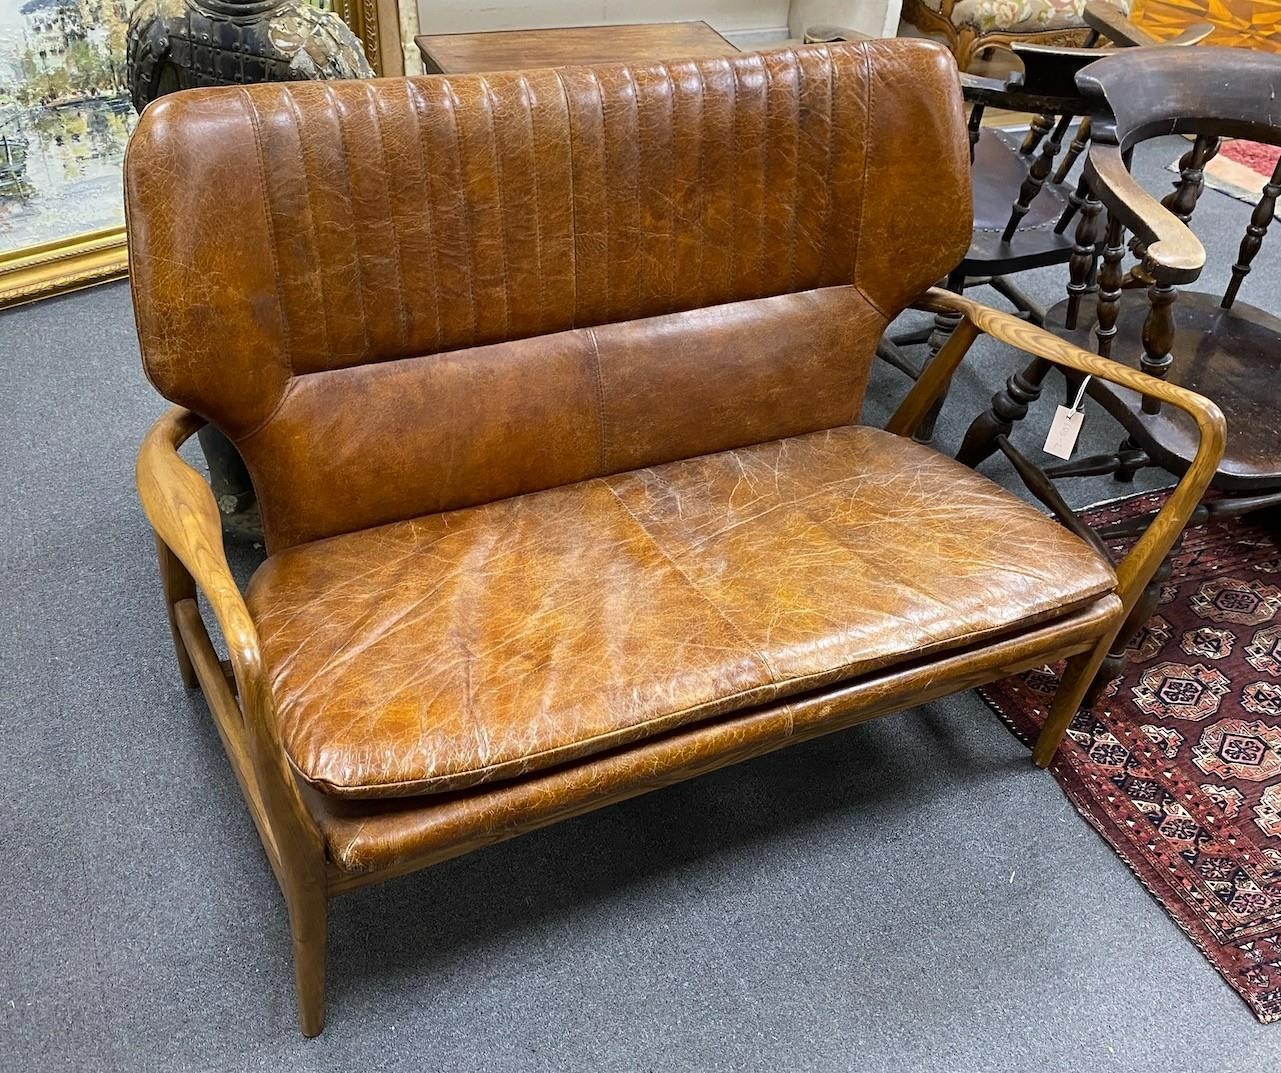 A Laura Ashley Whitworth oak and leather sofa, length 121cm, width 60cm, height 87cm